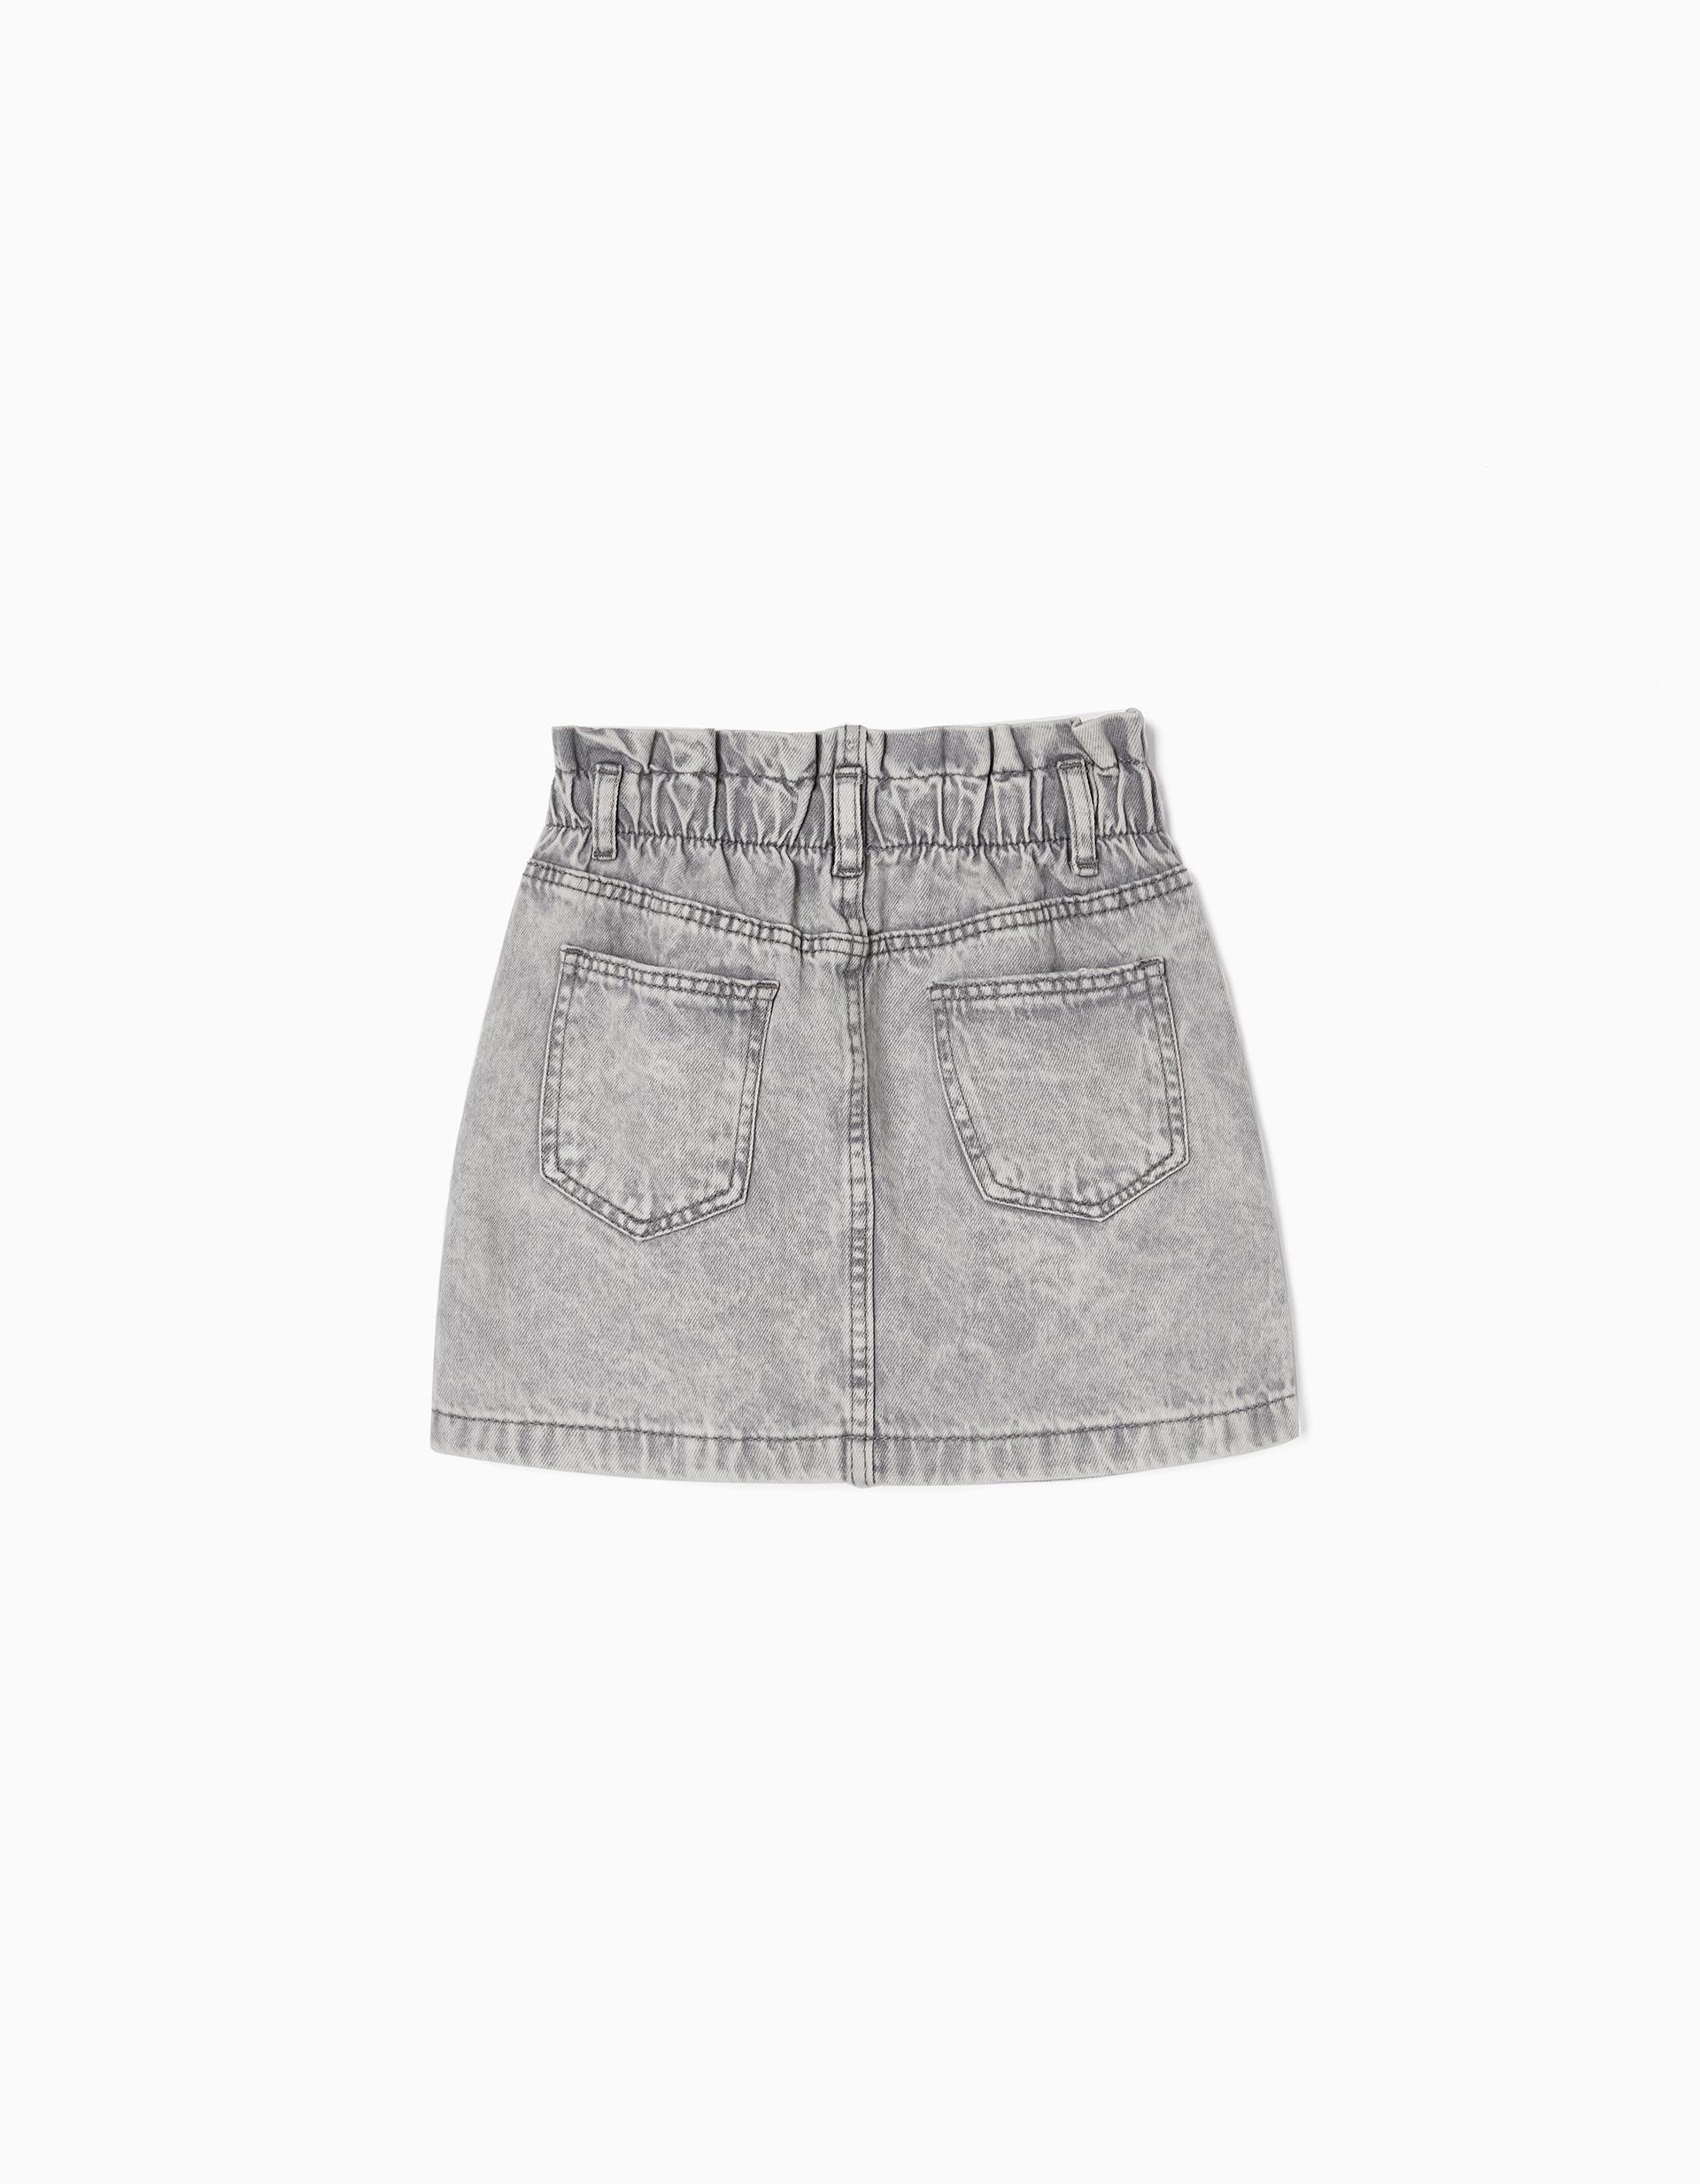 Zippy - Grey Paperbag Denim Skirt, Kids Girls